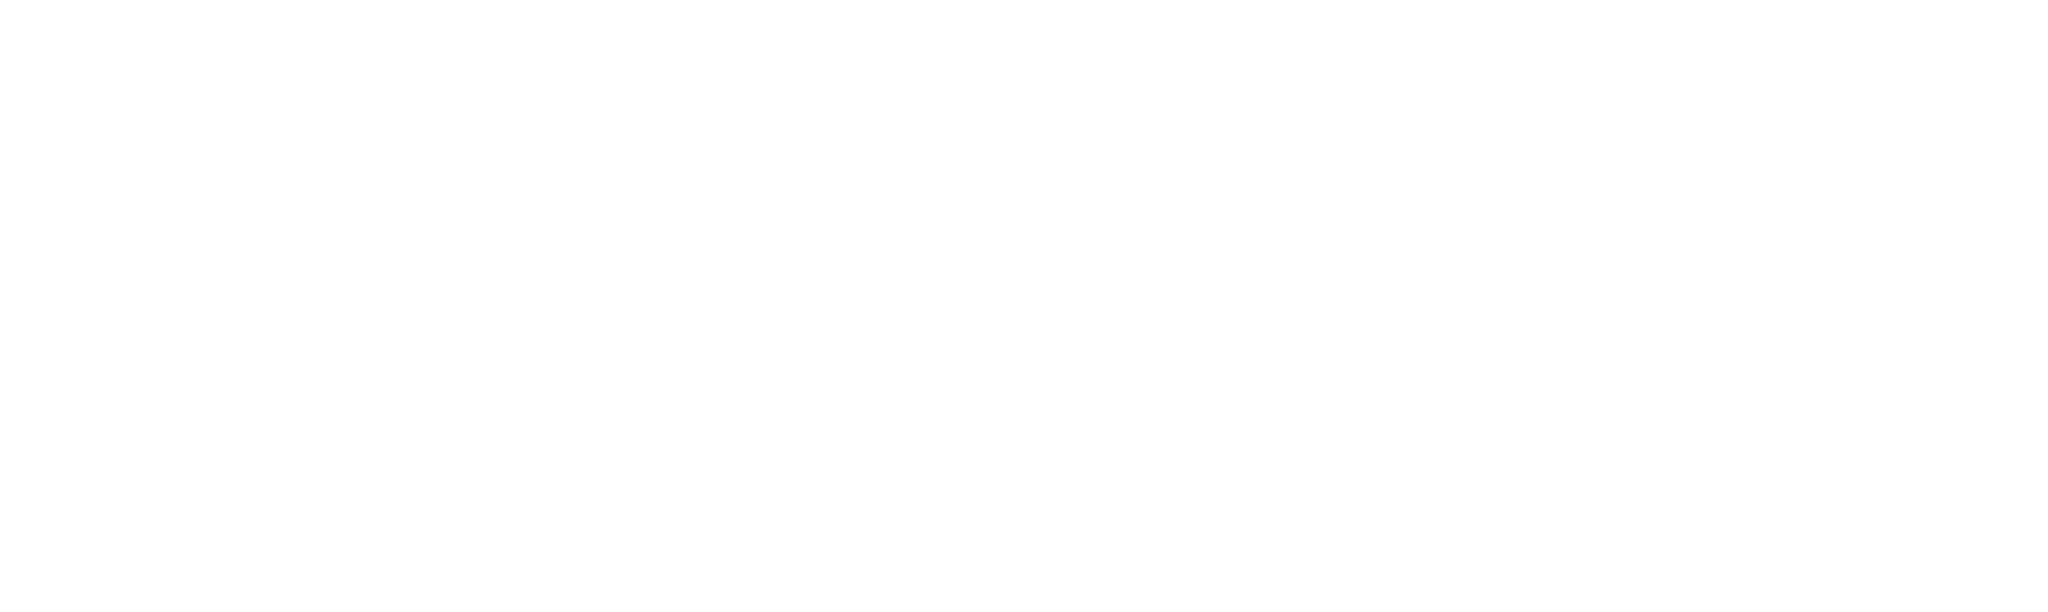 decorative pattern